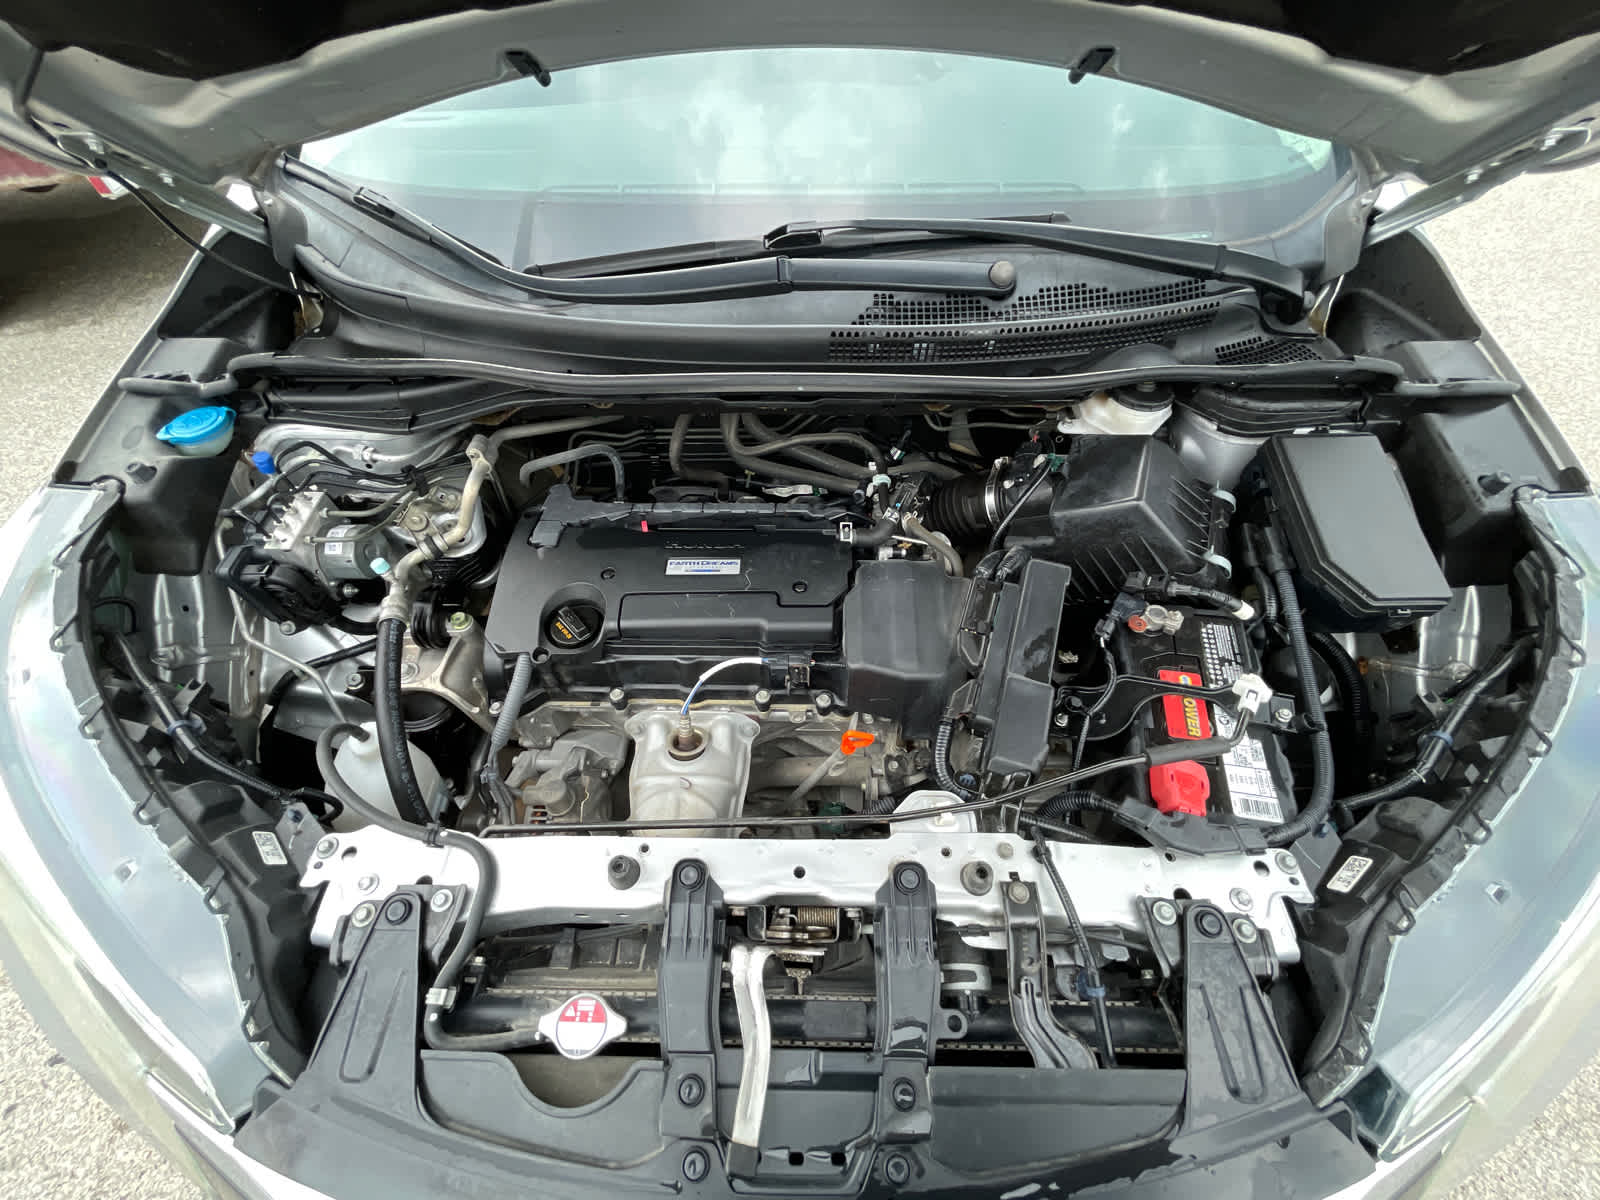 2016 Honda CR-V Touring 17